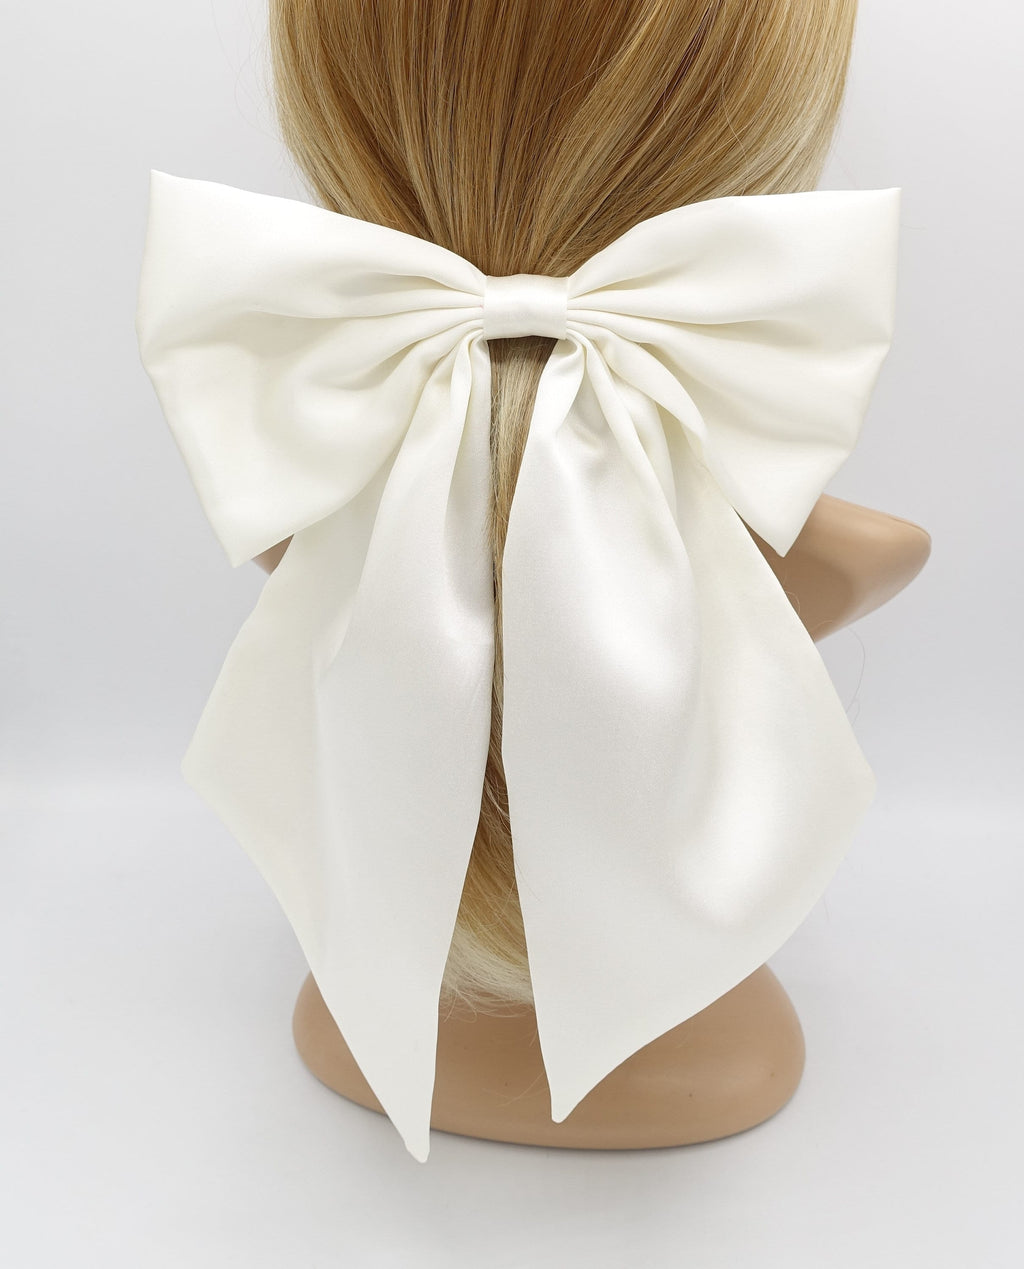 VeryShine grand satin hair bow edge tail hair accessory for women